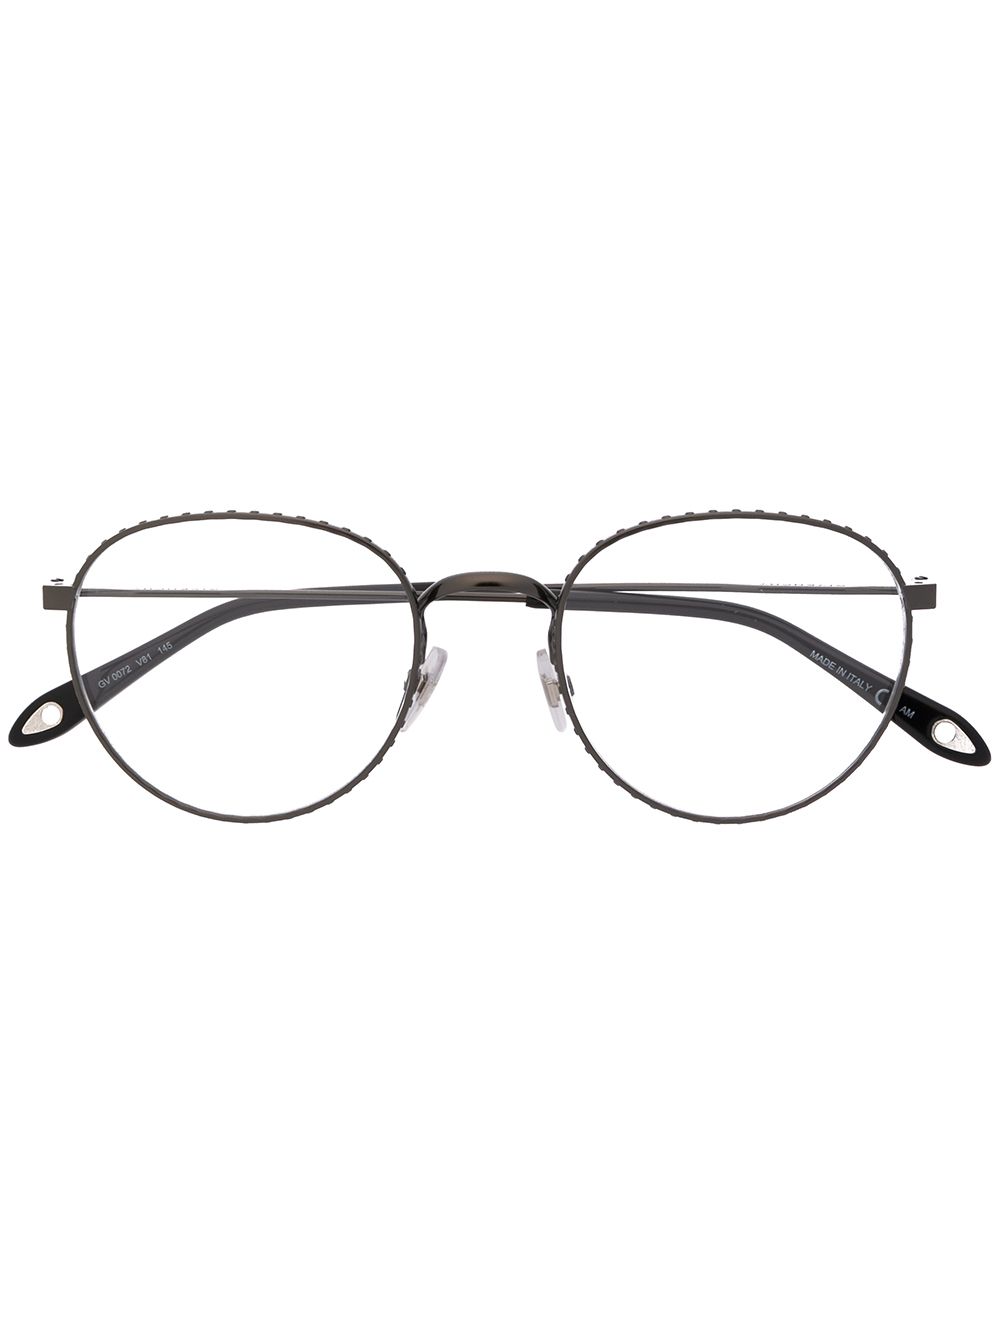 фото Givenchy eyewear очки в круглой оправе